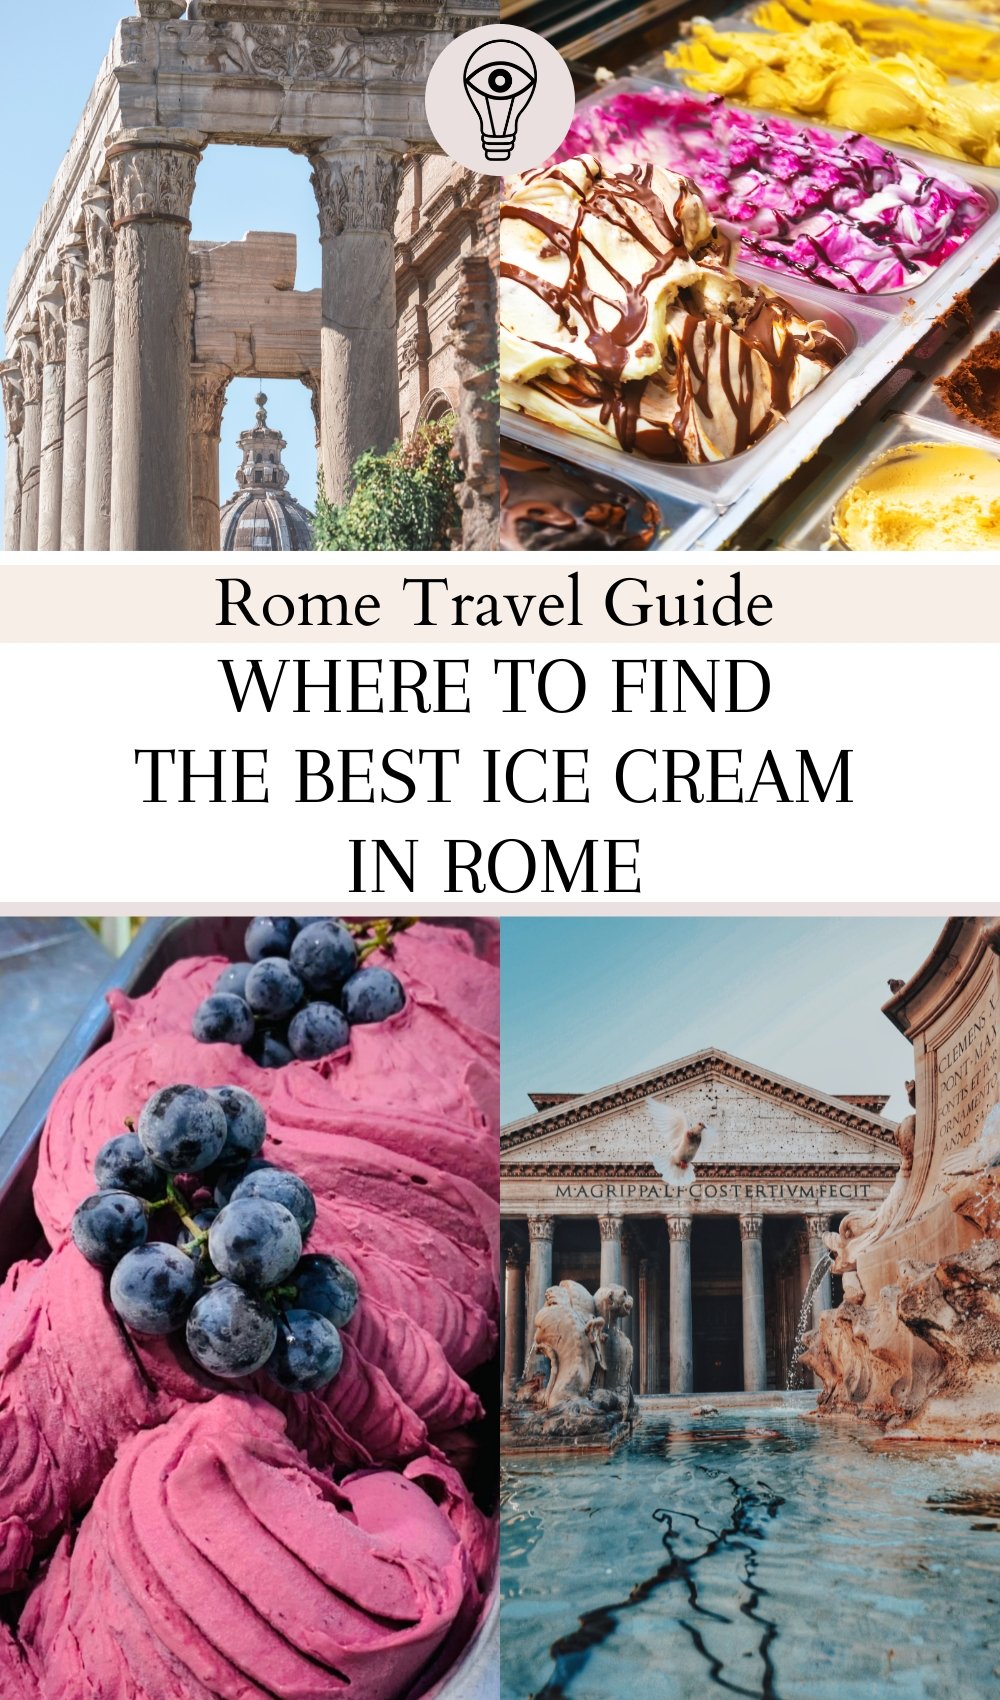 Rome's 15 Best Ice Cream & Gelato Shops